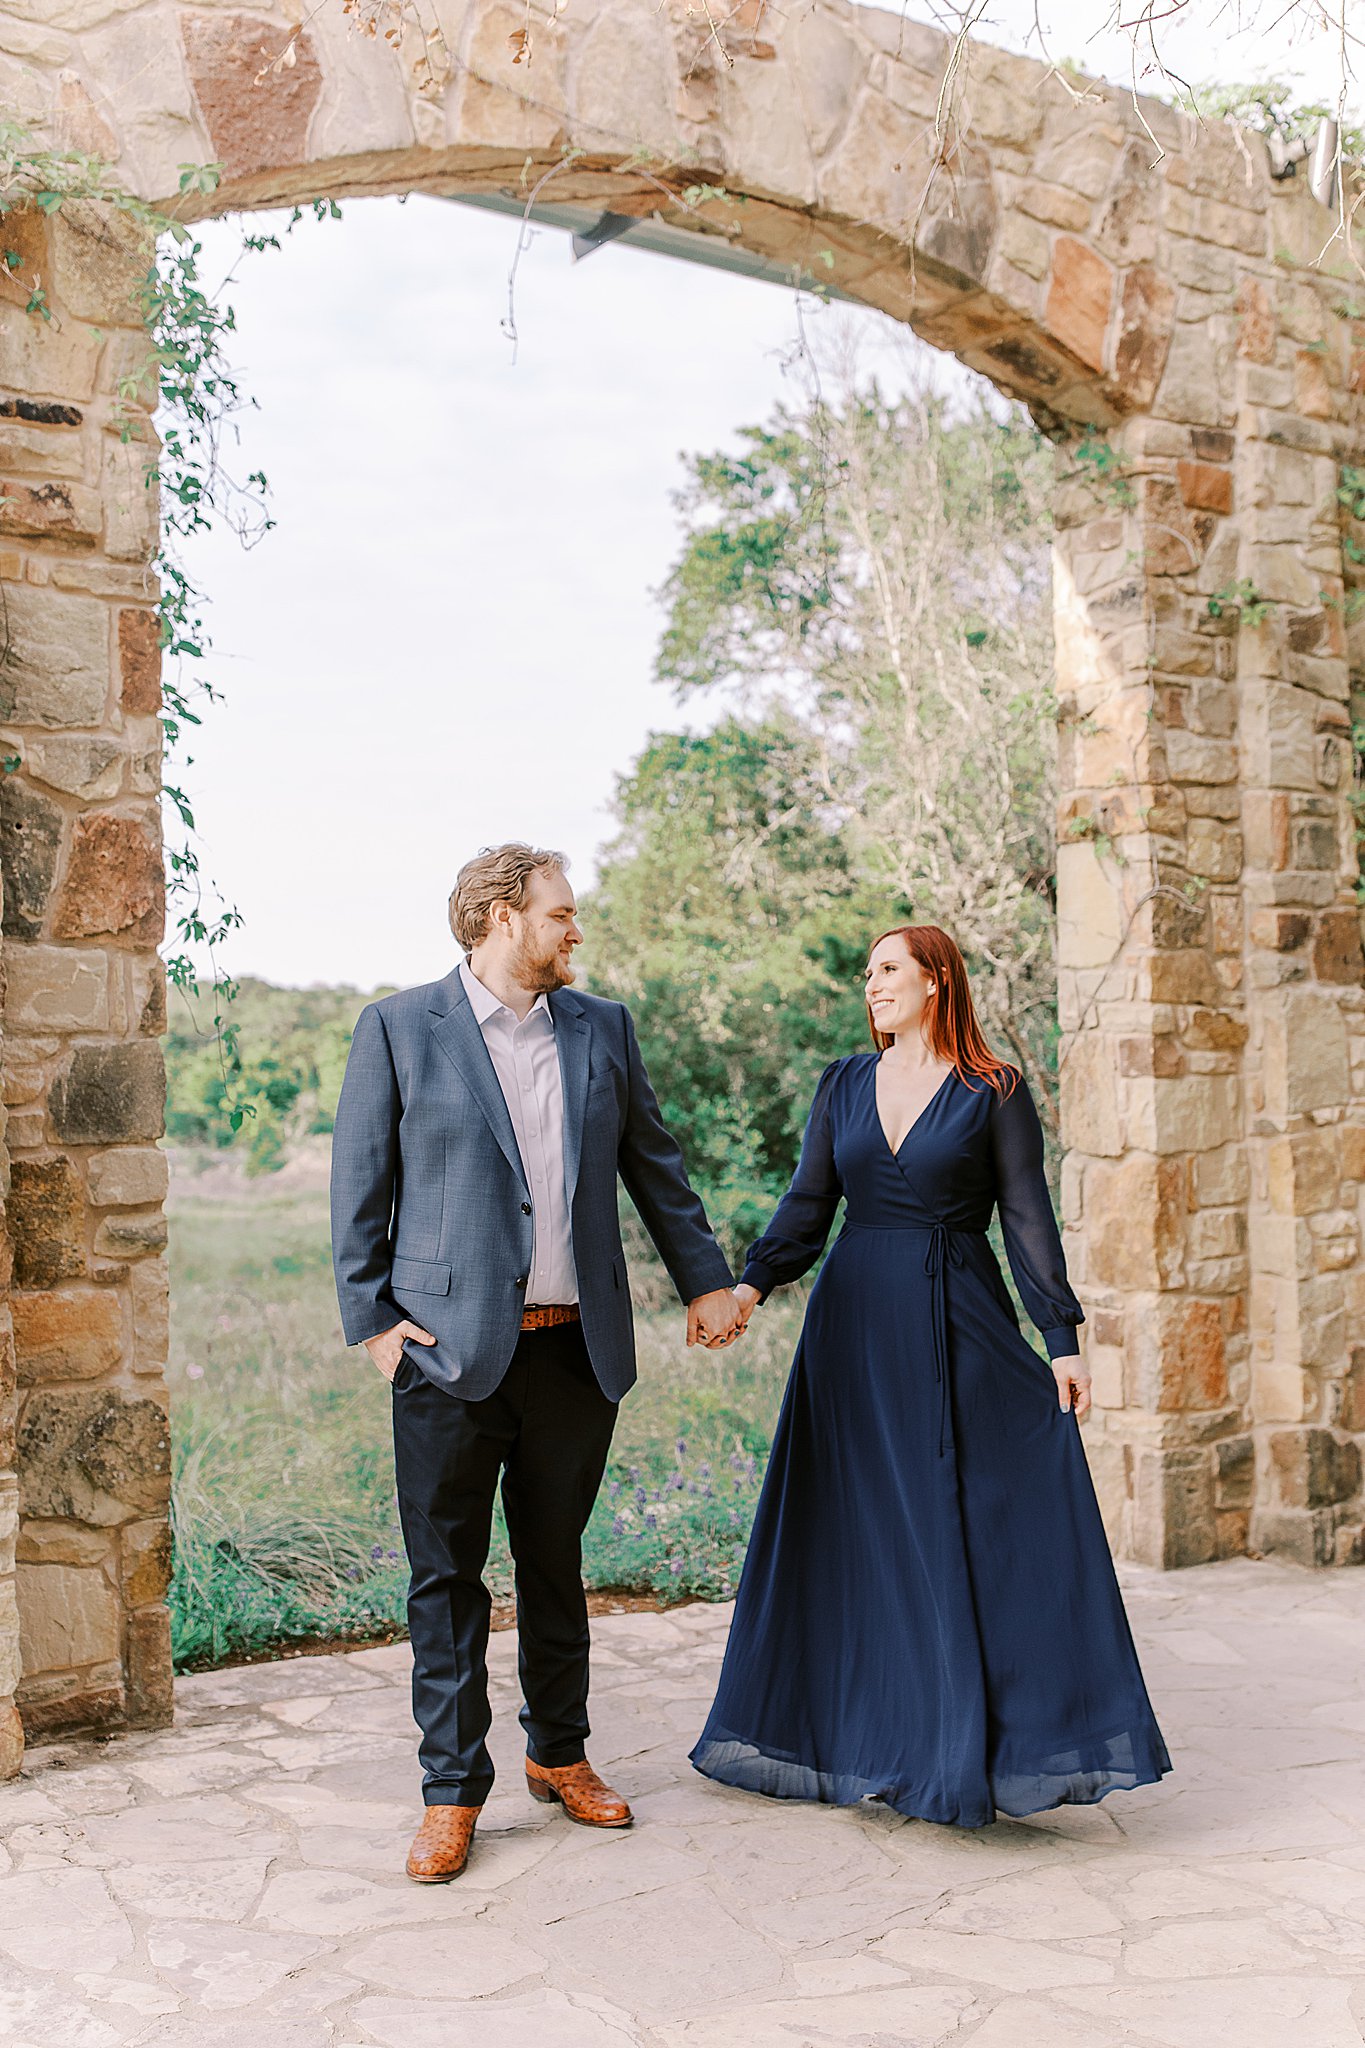 Baltic Born Navy Blue Dress for Engagement Photos, Austin, Texas